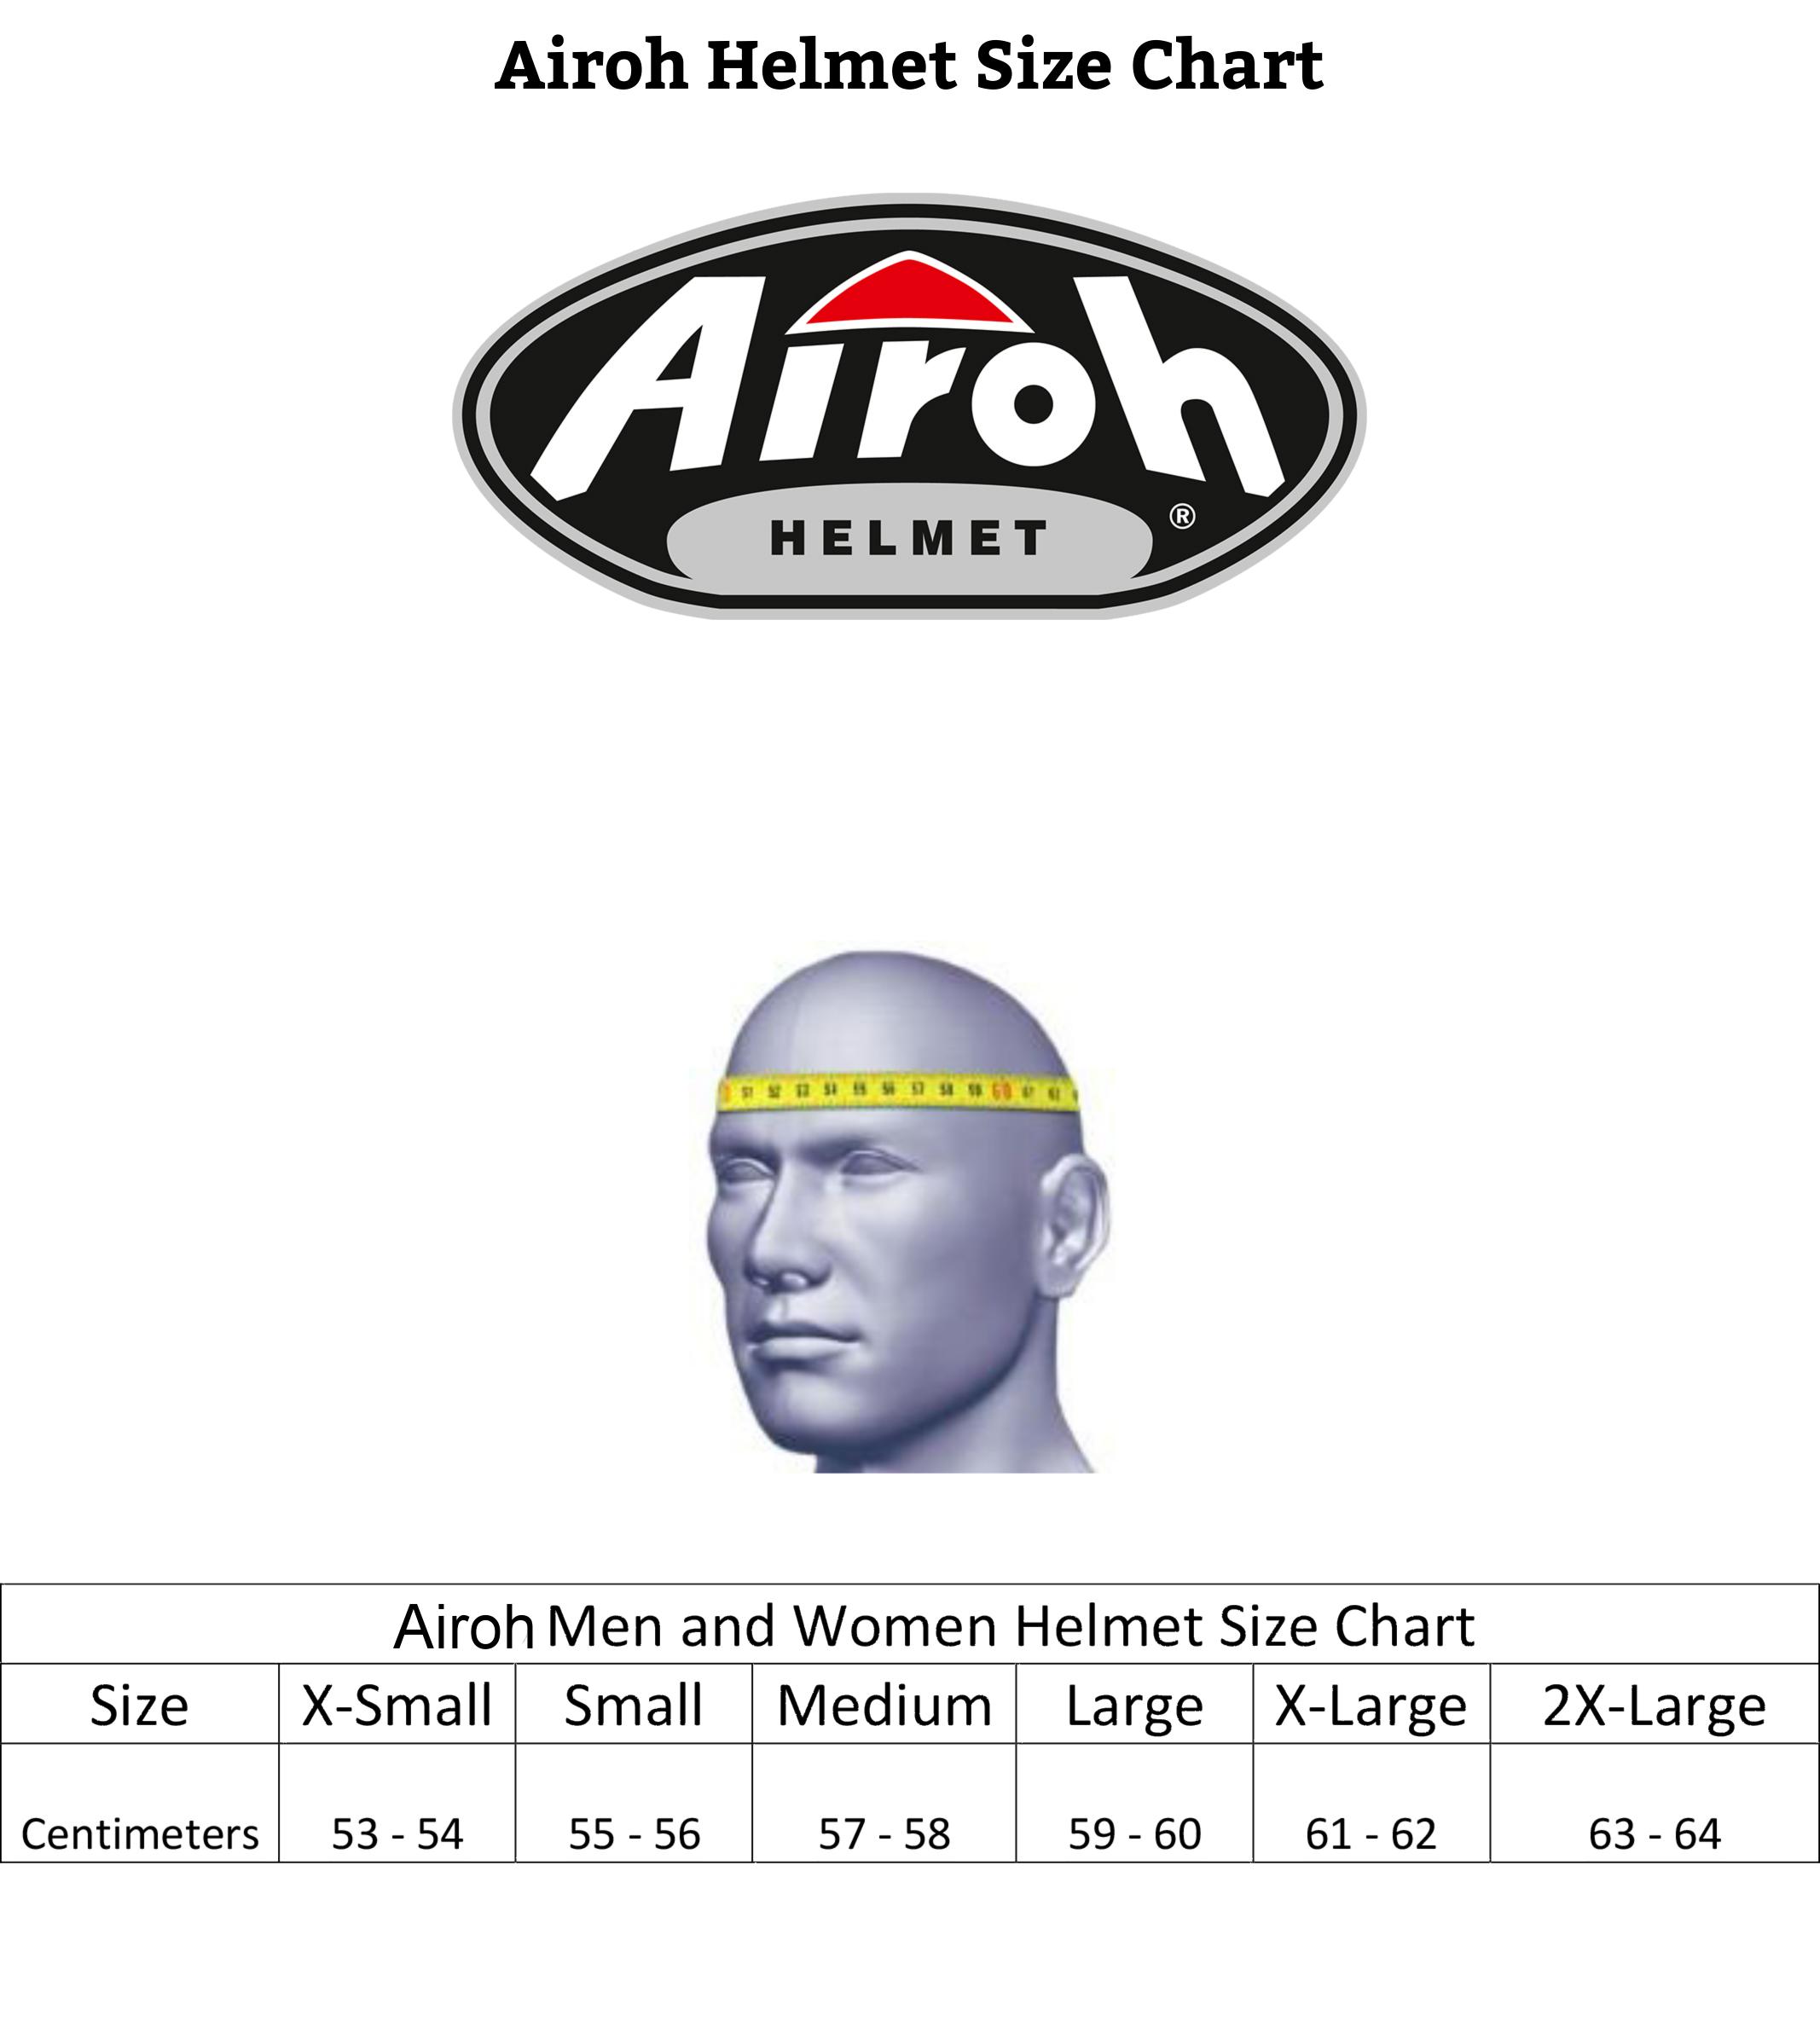 Airoh Helmet Size Chart